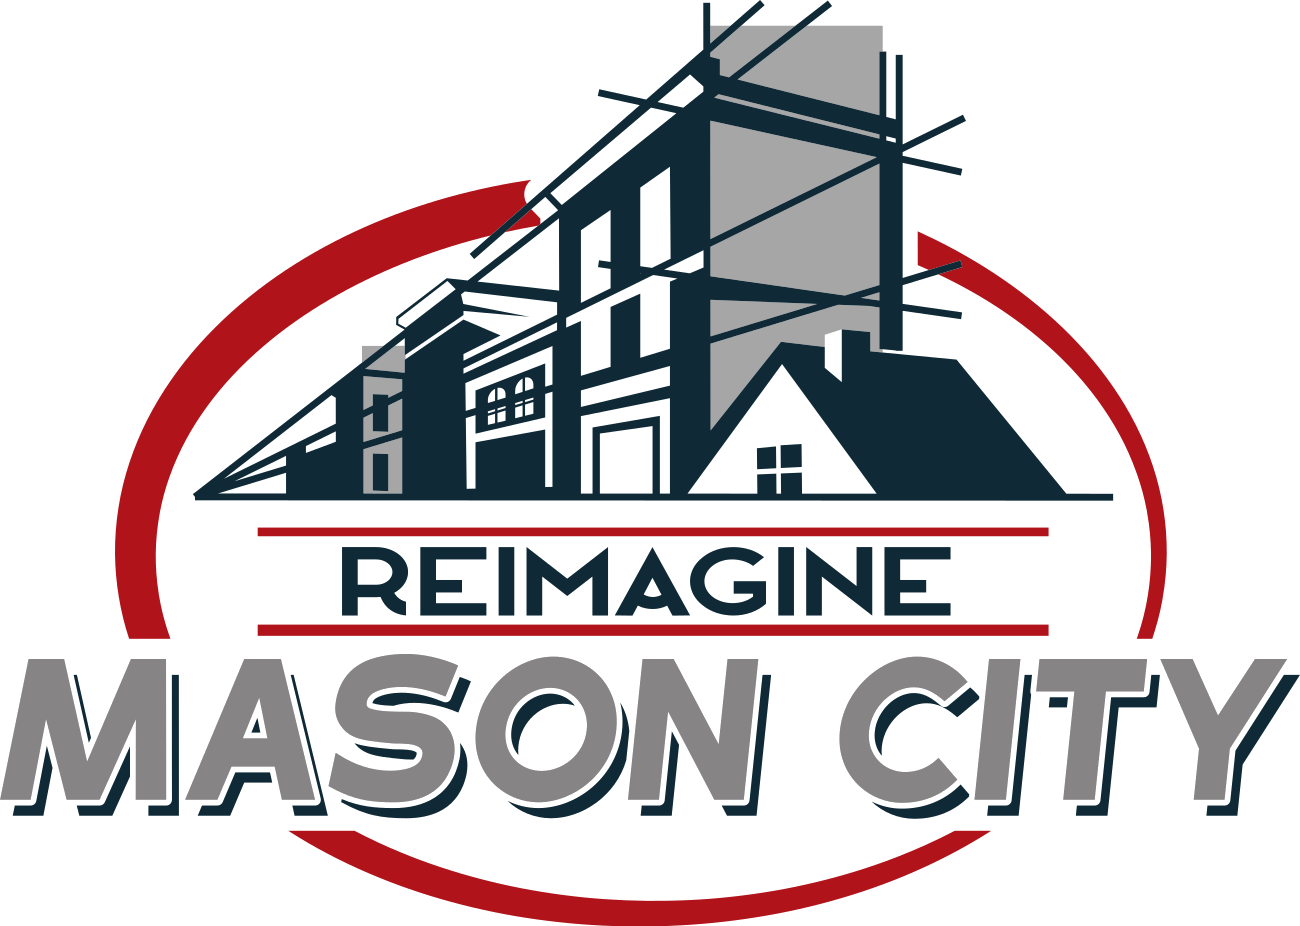 Reimagine Mason City Foundation